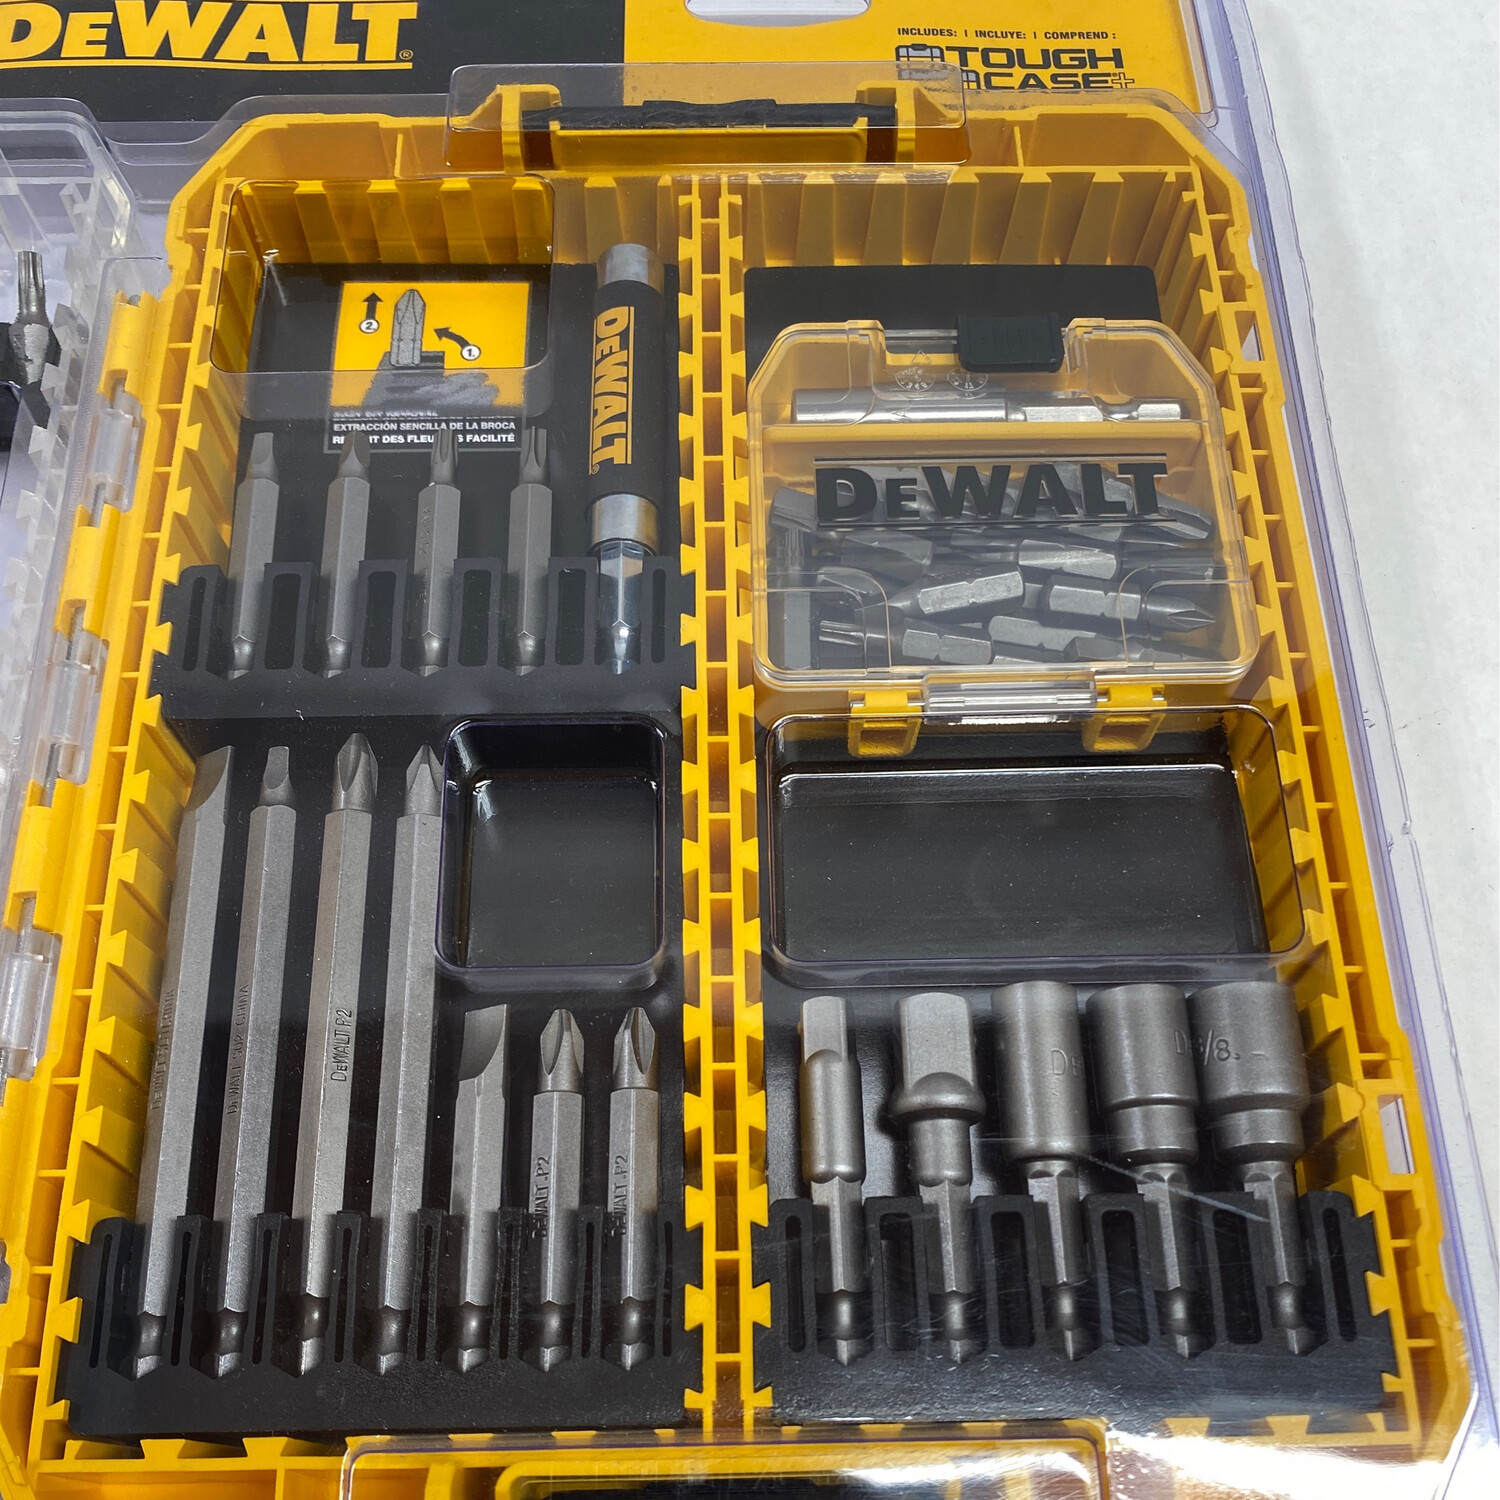 DeWalt 80 Piece Drilling And Driving Set, DWAMF1280